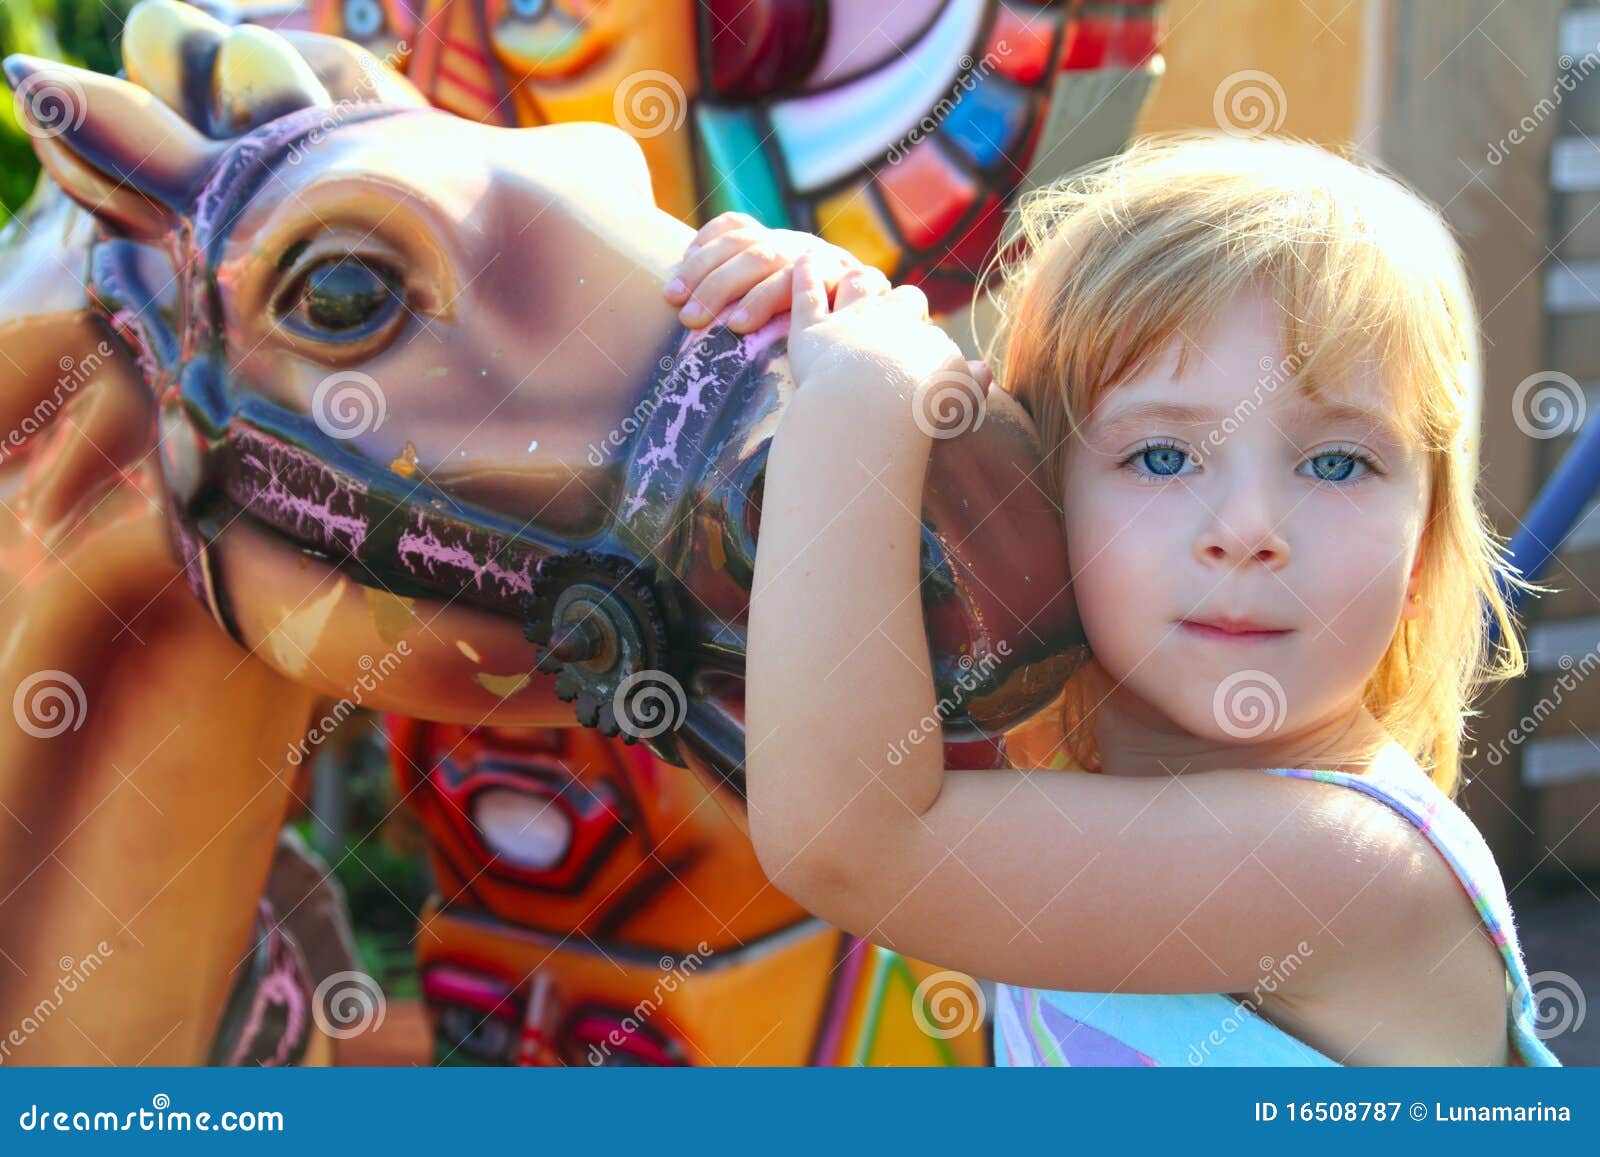 blond girl with fairground horse enjoy in park